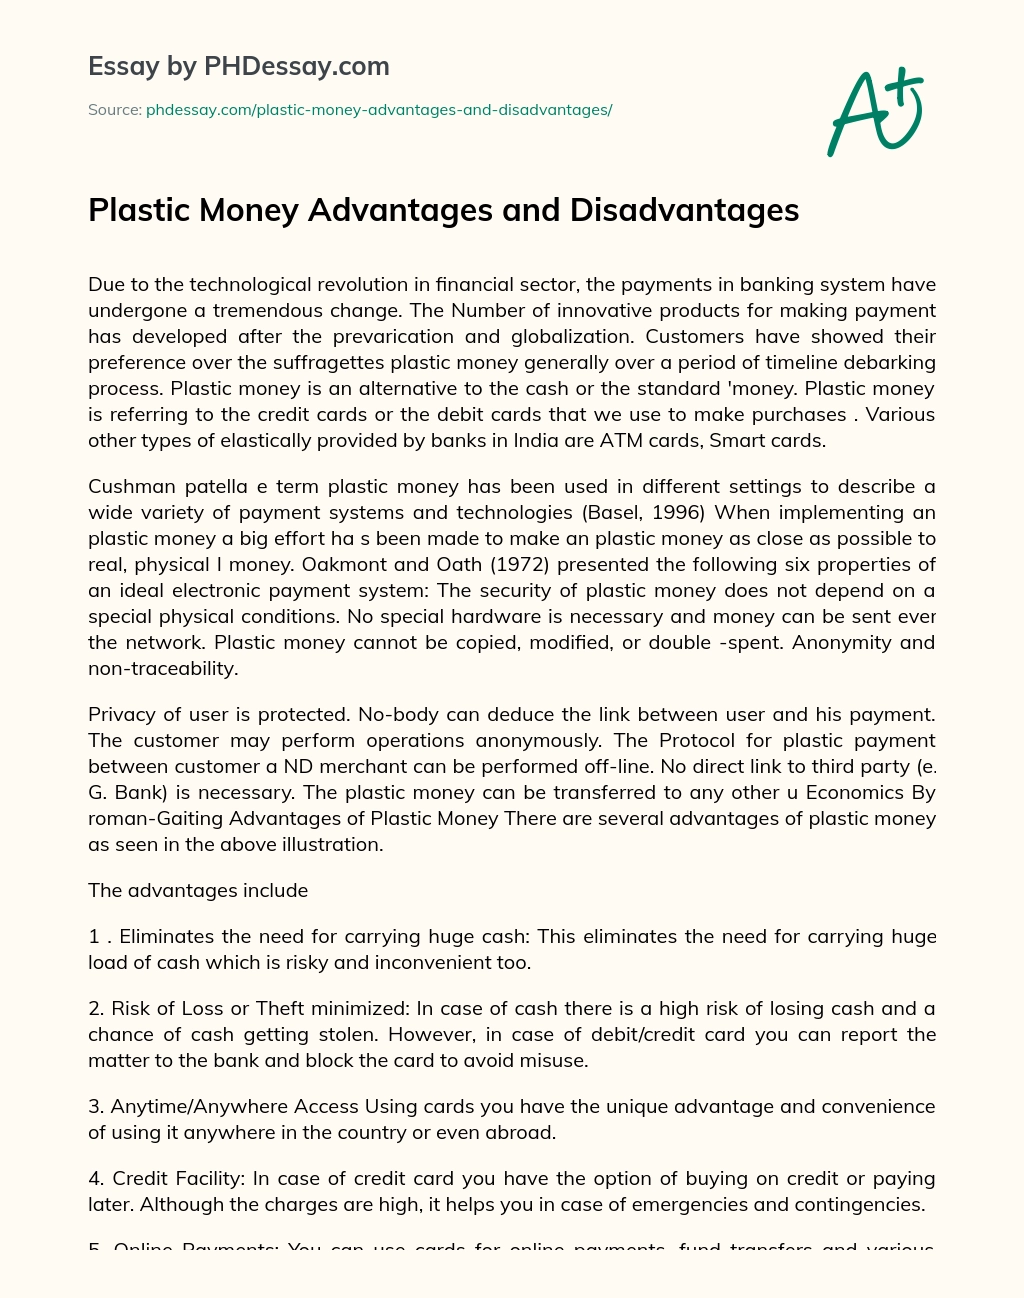 Plastic Money Advantages and Disadvantages essay